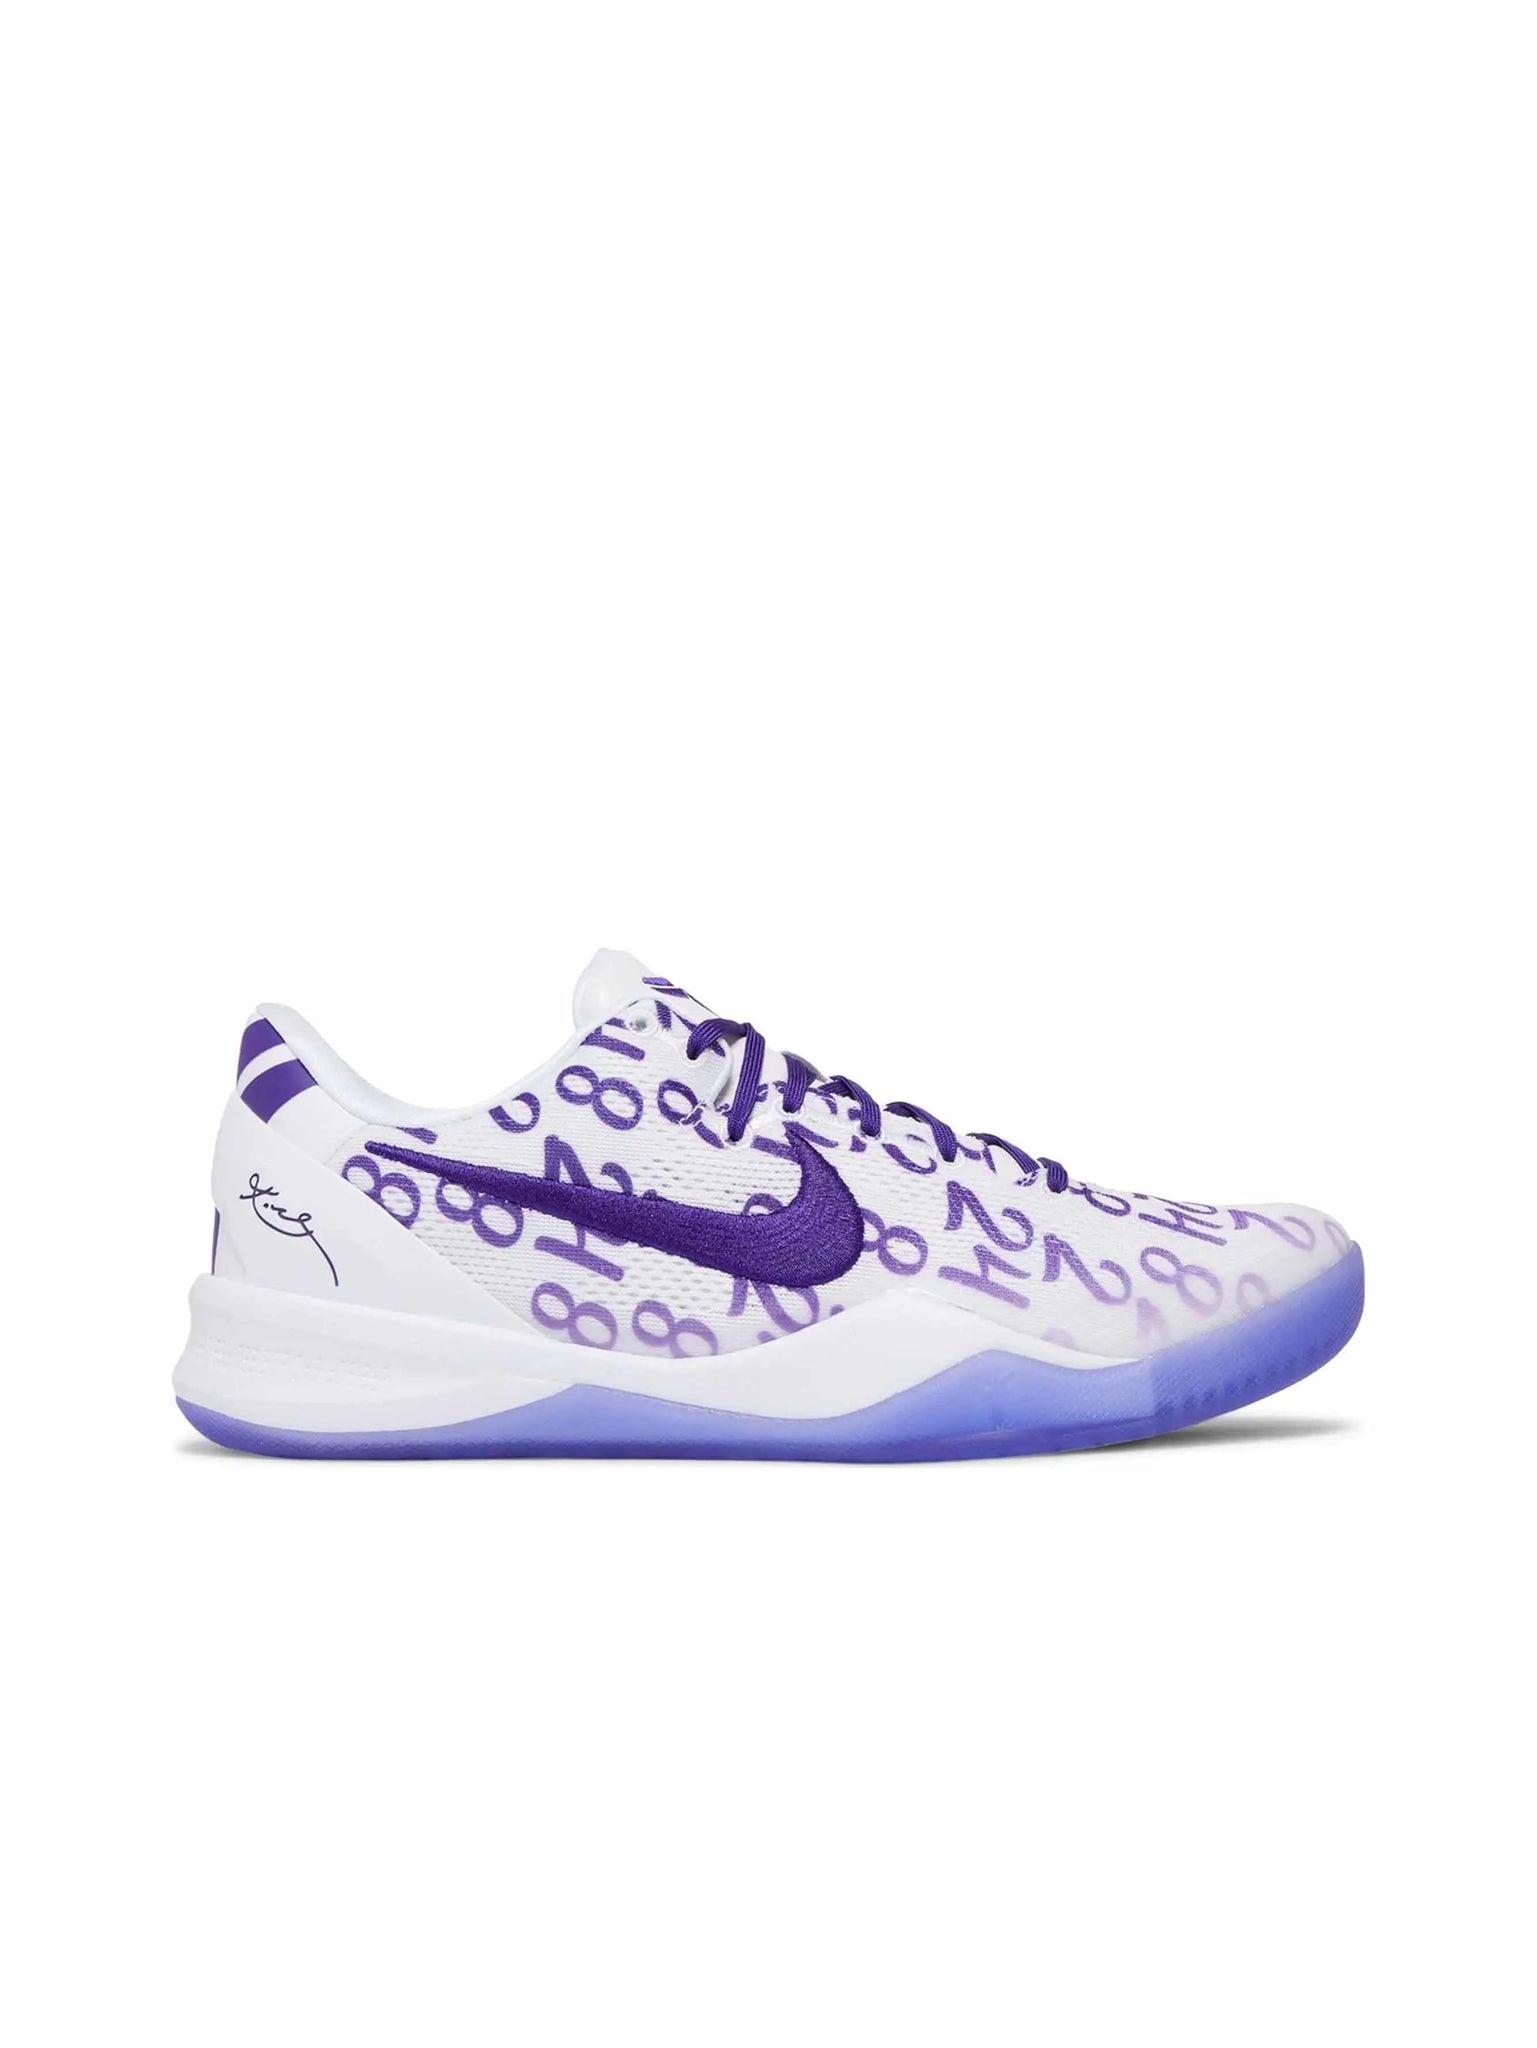 Nike Kobe 8 Protro Court Purple in Auckland, New Zealand - Shop name